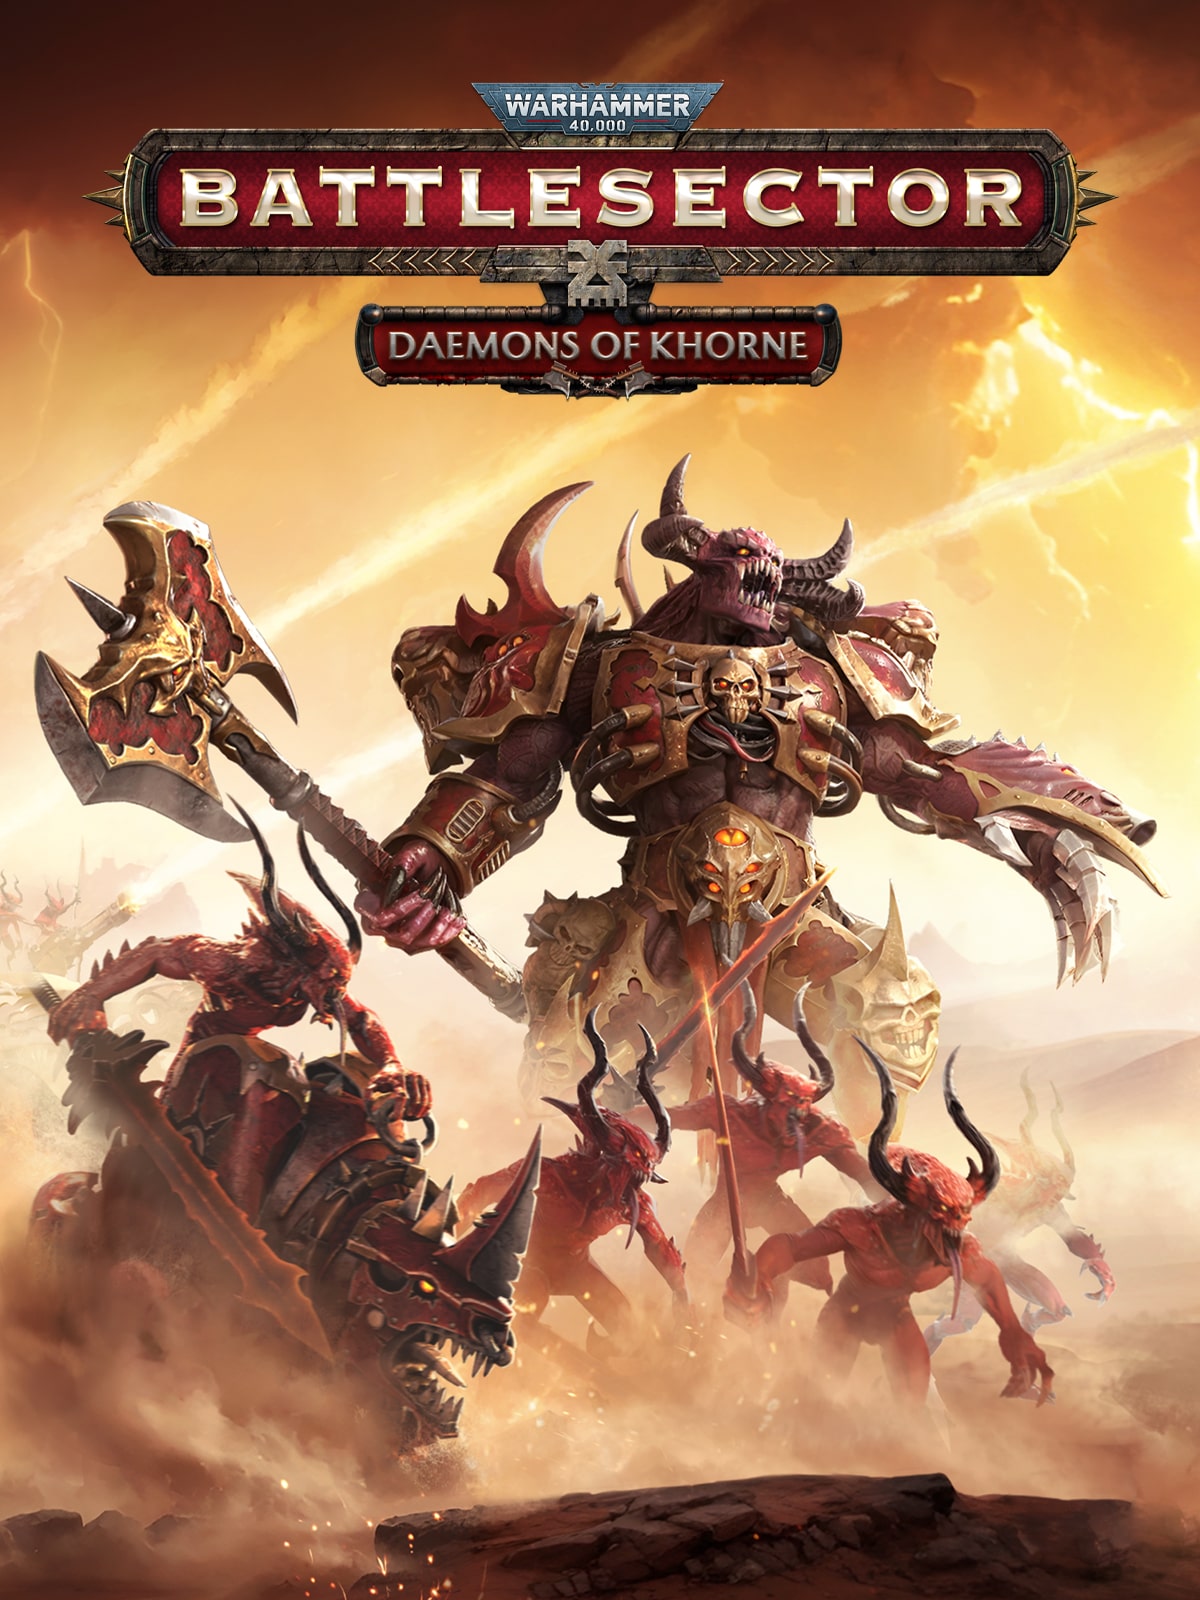 Retrouvez notre TEST : Warhammer 40,000 : Battlesector Daemons of Khorne